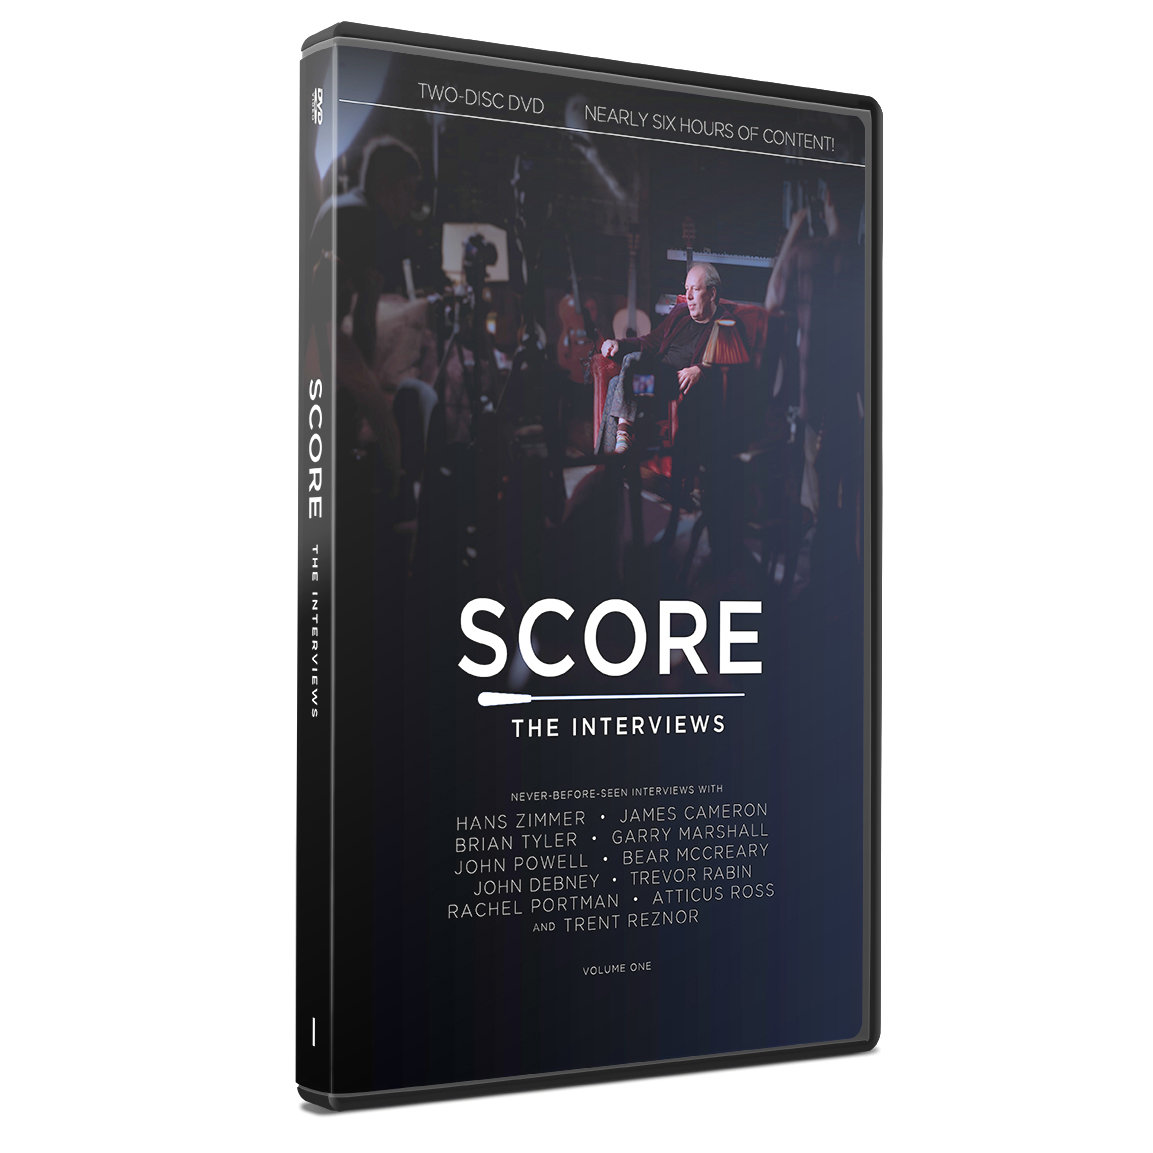 SCORE: The Interviews 2-Disc DVD Combo Bonus Features